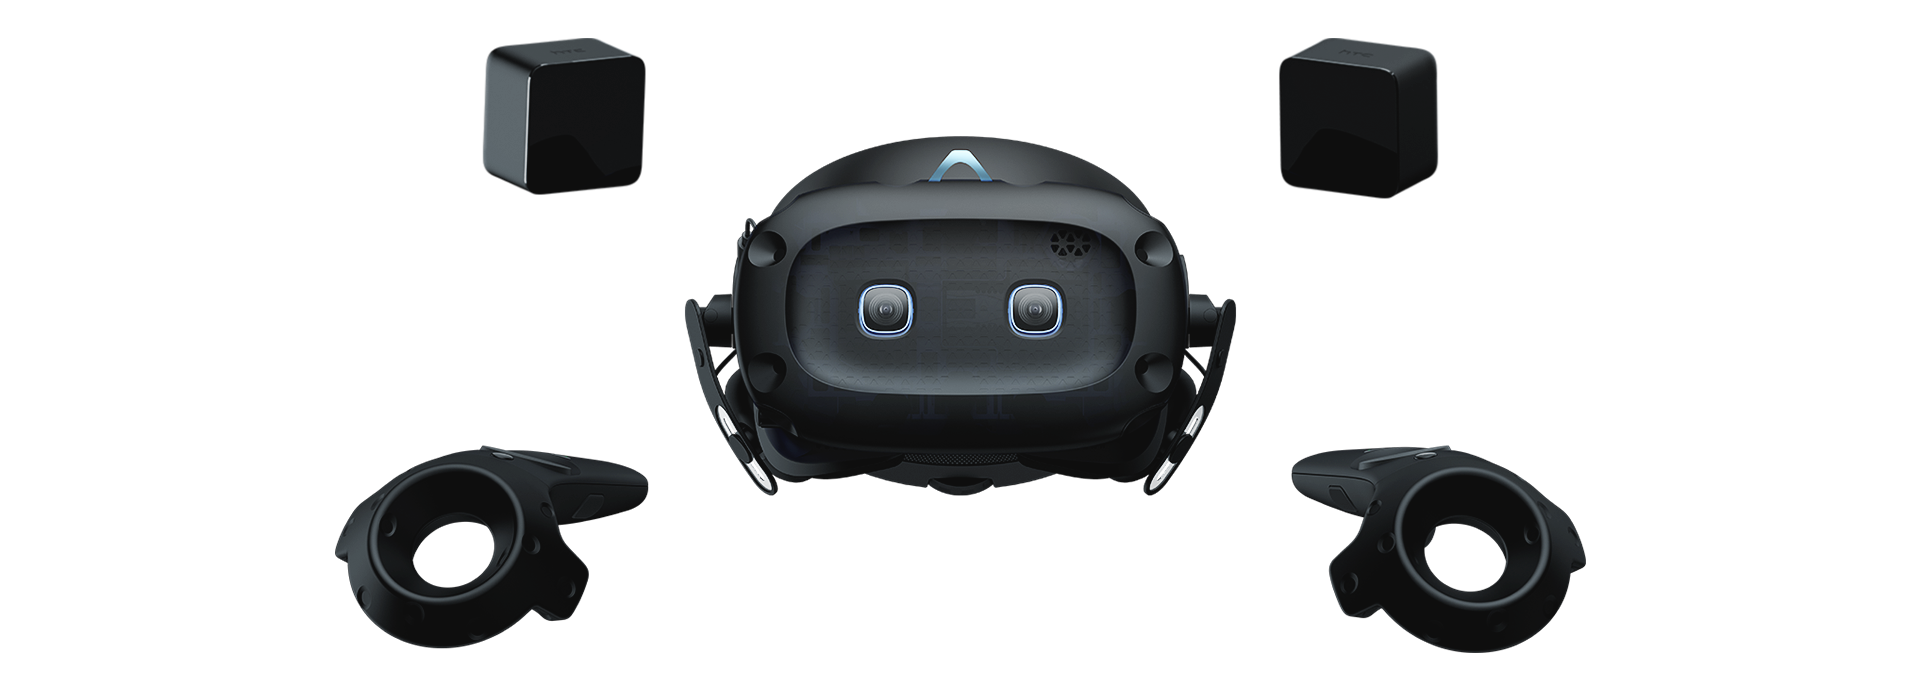 HTC Vive Cosmo Elite Virtual Reality System - PC